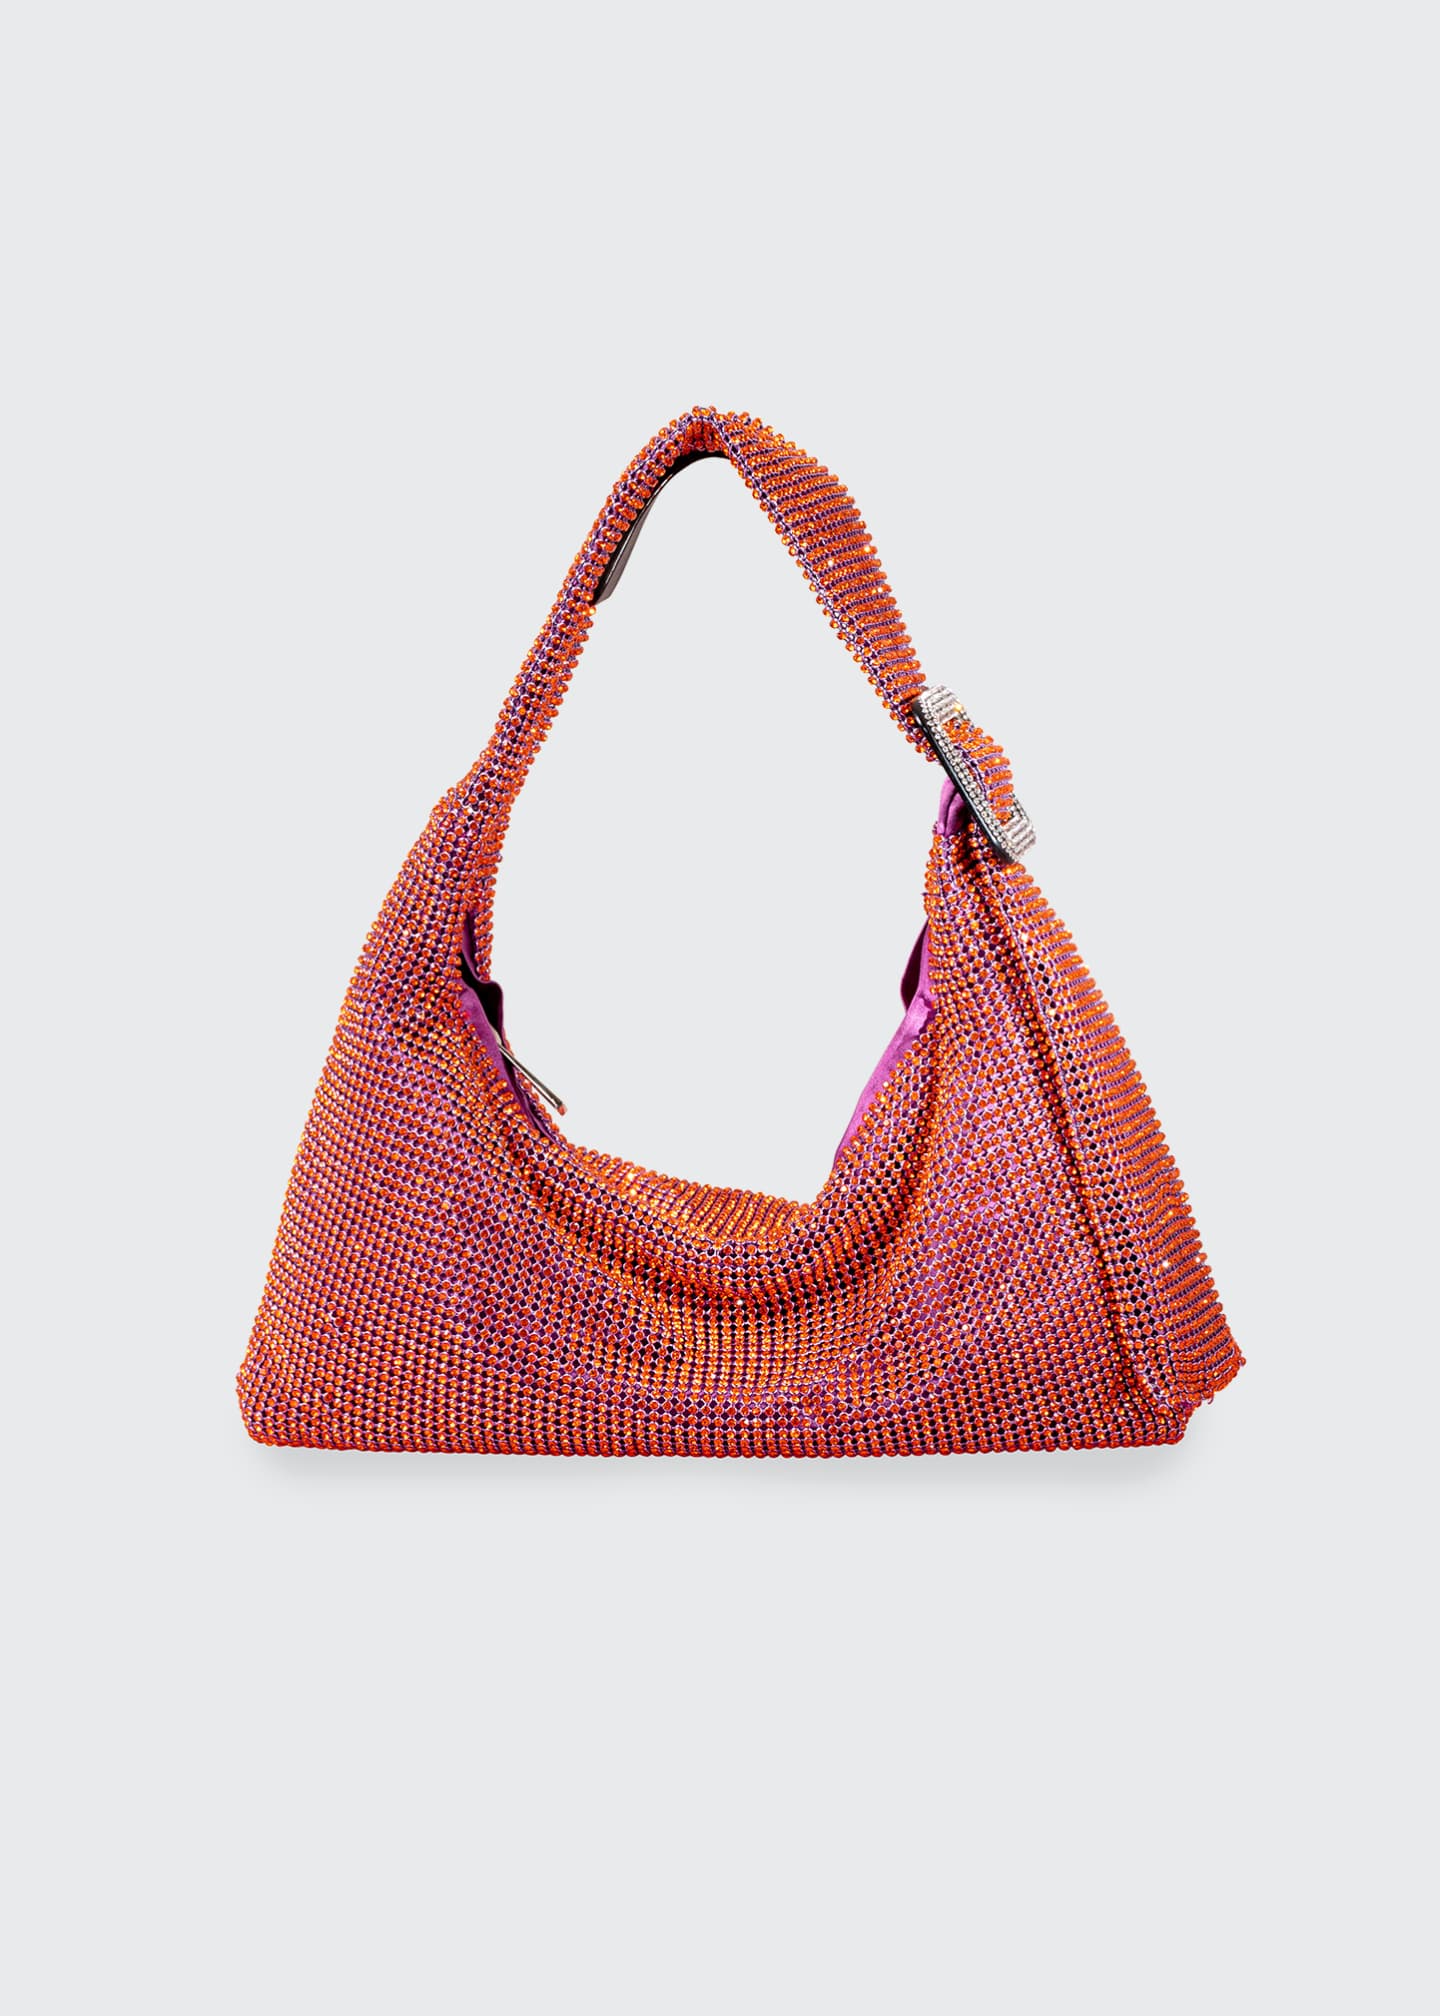 Benedetta Bruzziches Pina Bausch Crystal-Embellished Shoulder Bag ...